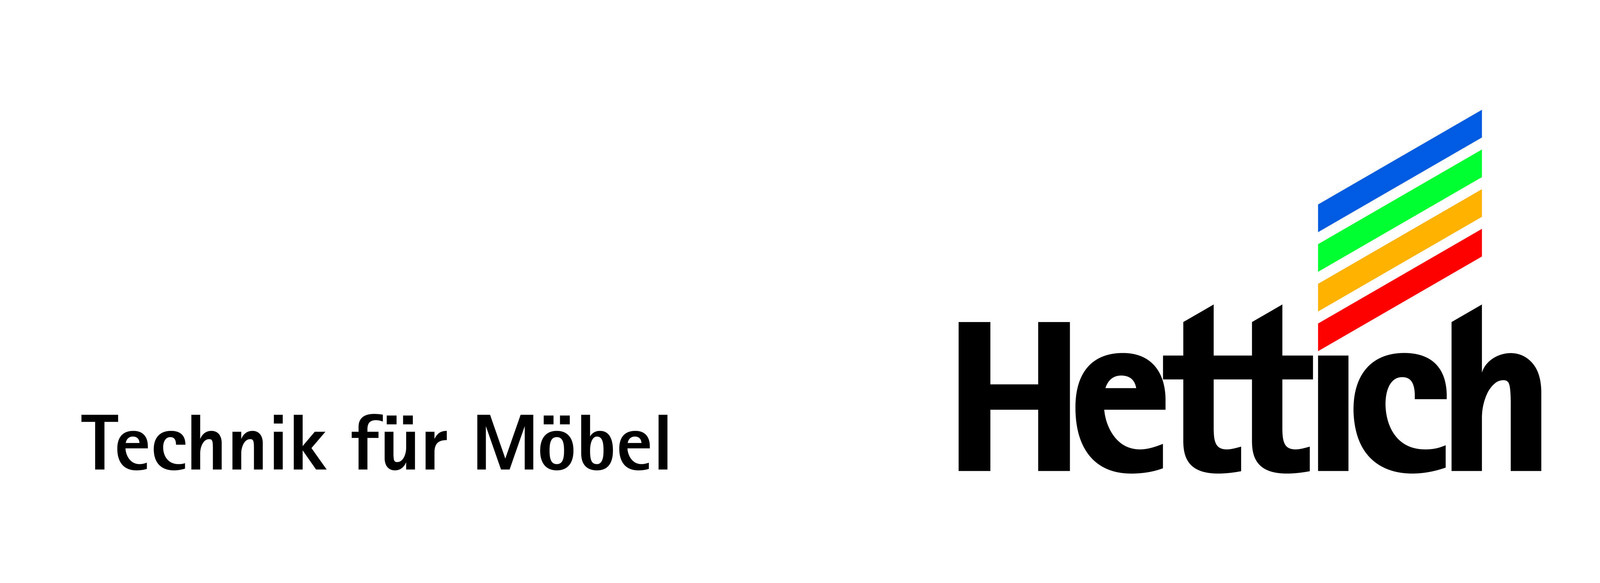 Hettich_slogan-logo_4c.jpg